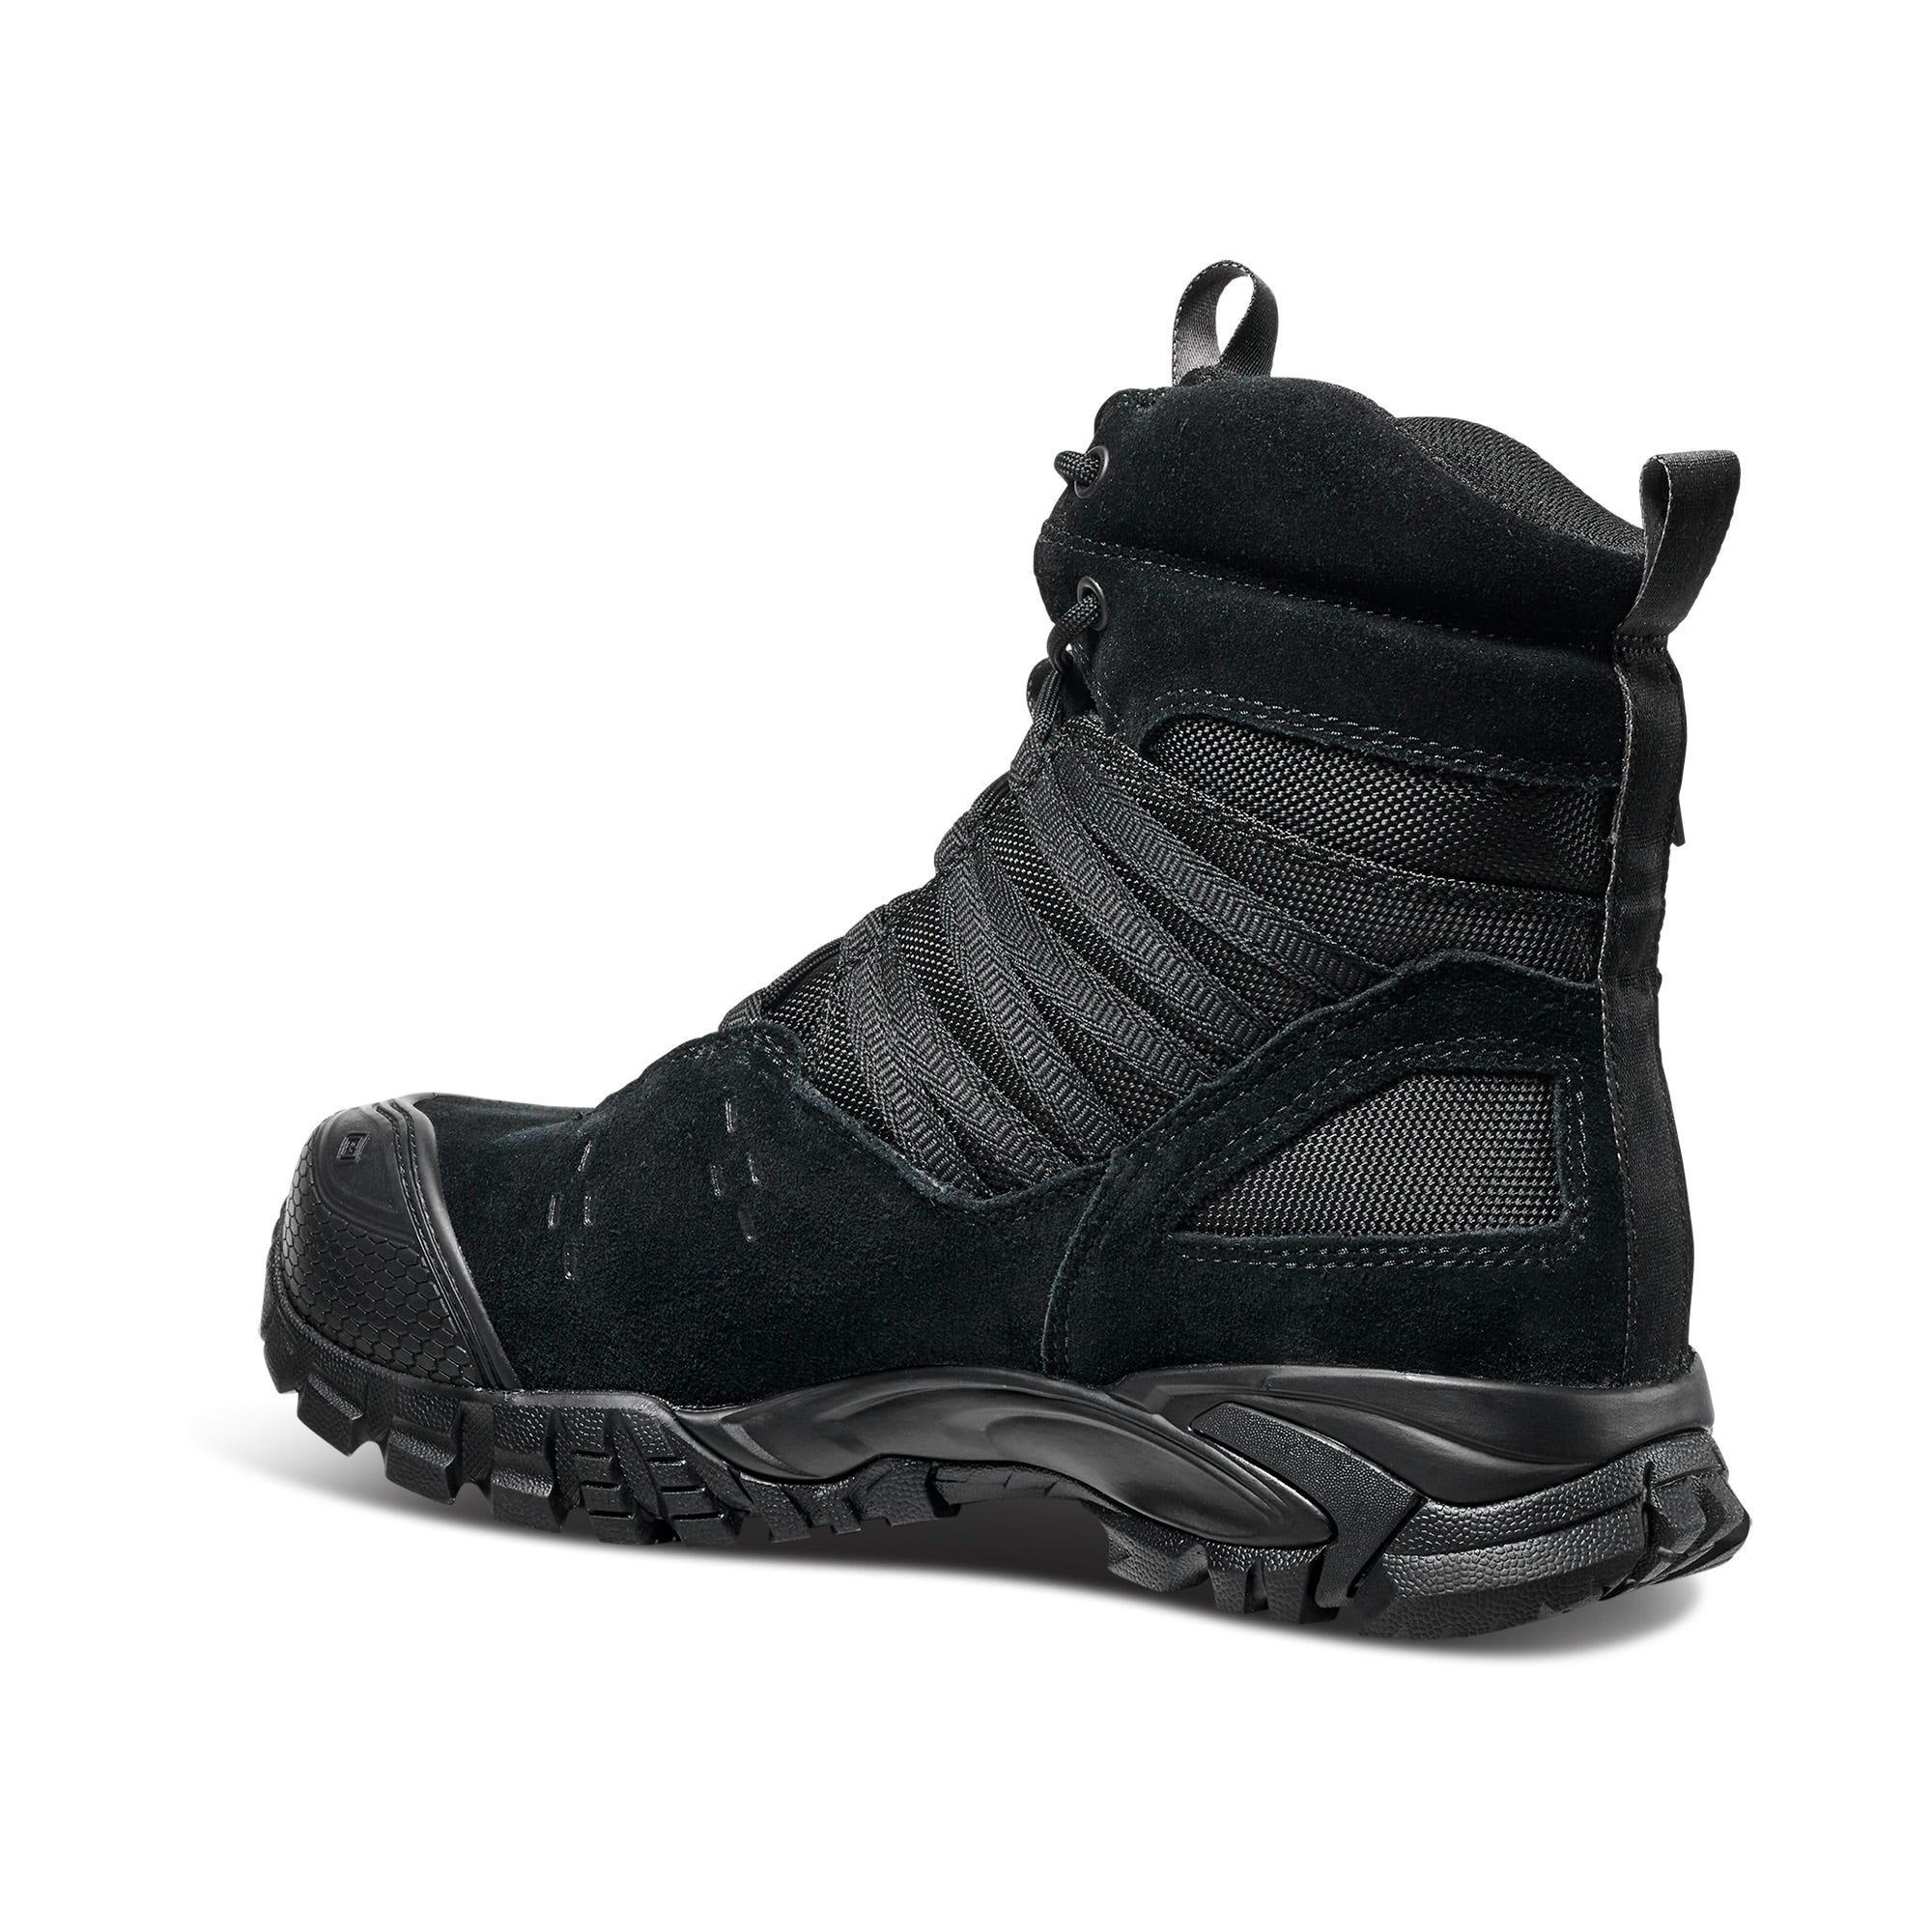 5.11 Work Gear Men's Union Waterproof 6-Inch Work Boots, Shock Absorbing Insole, Black, 7.5 Wide, Style 12390 - image 4 of 8